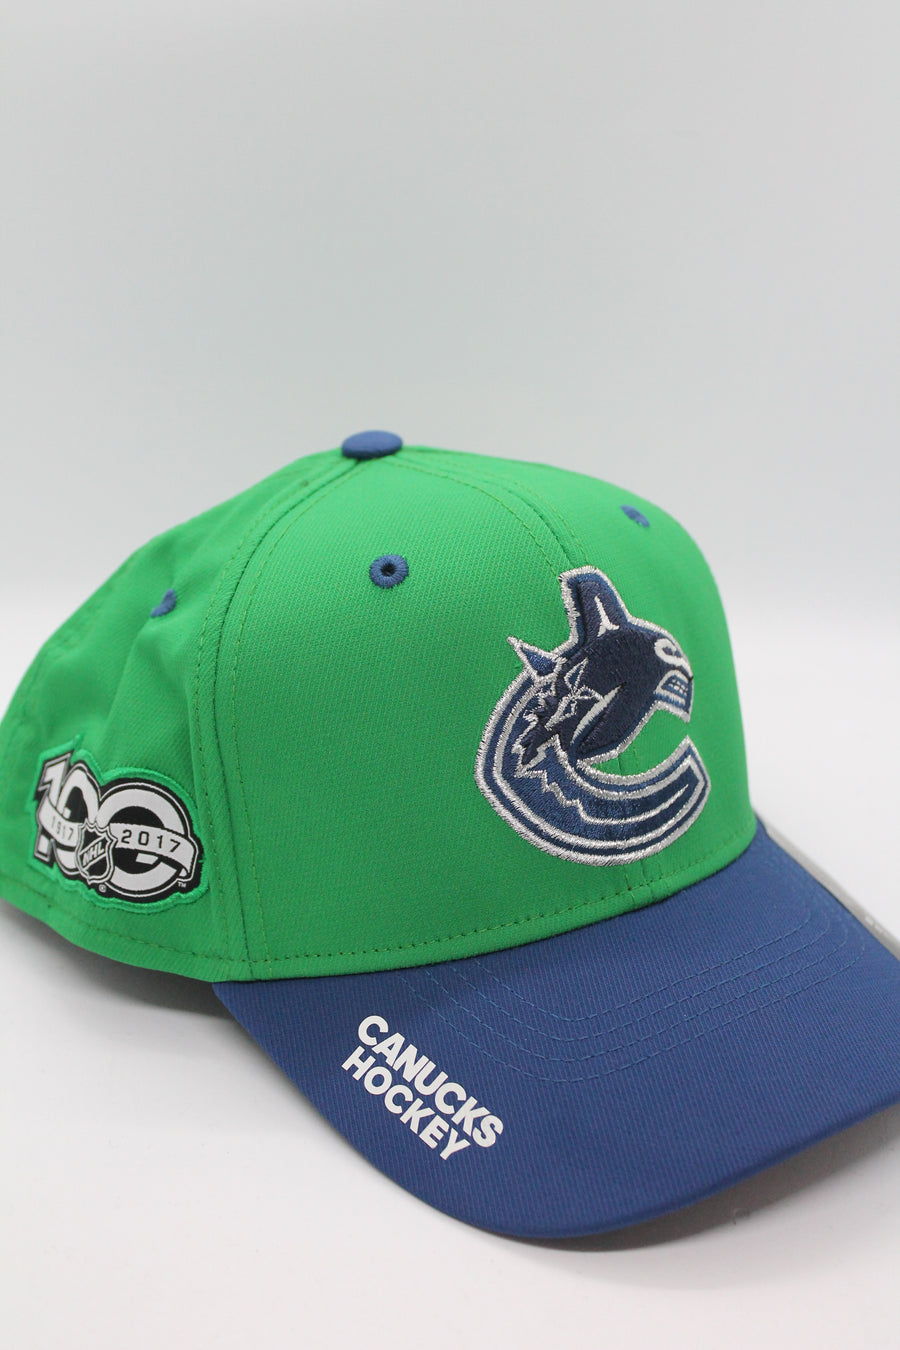 NHL Boston Bruins Moneymaker Hat